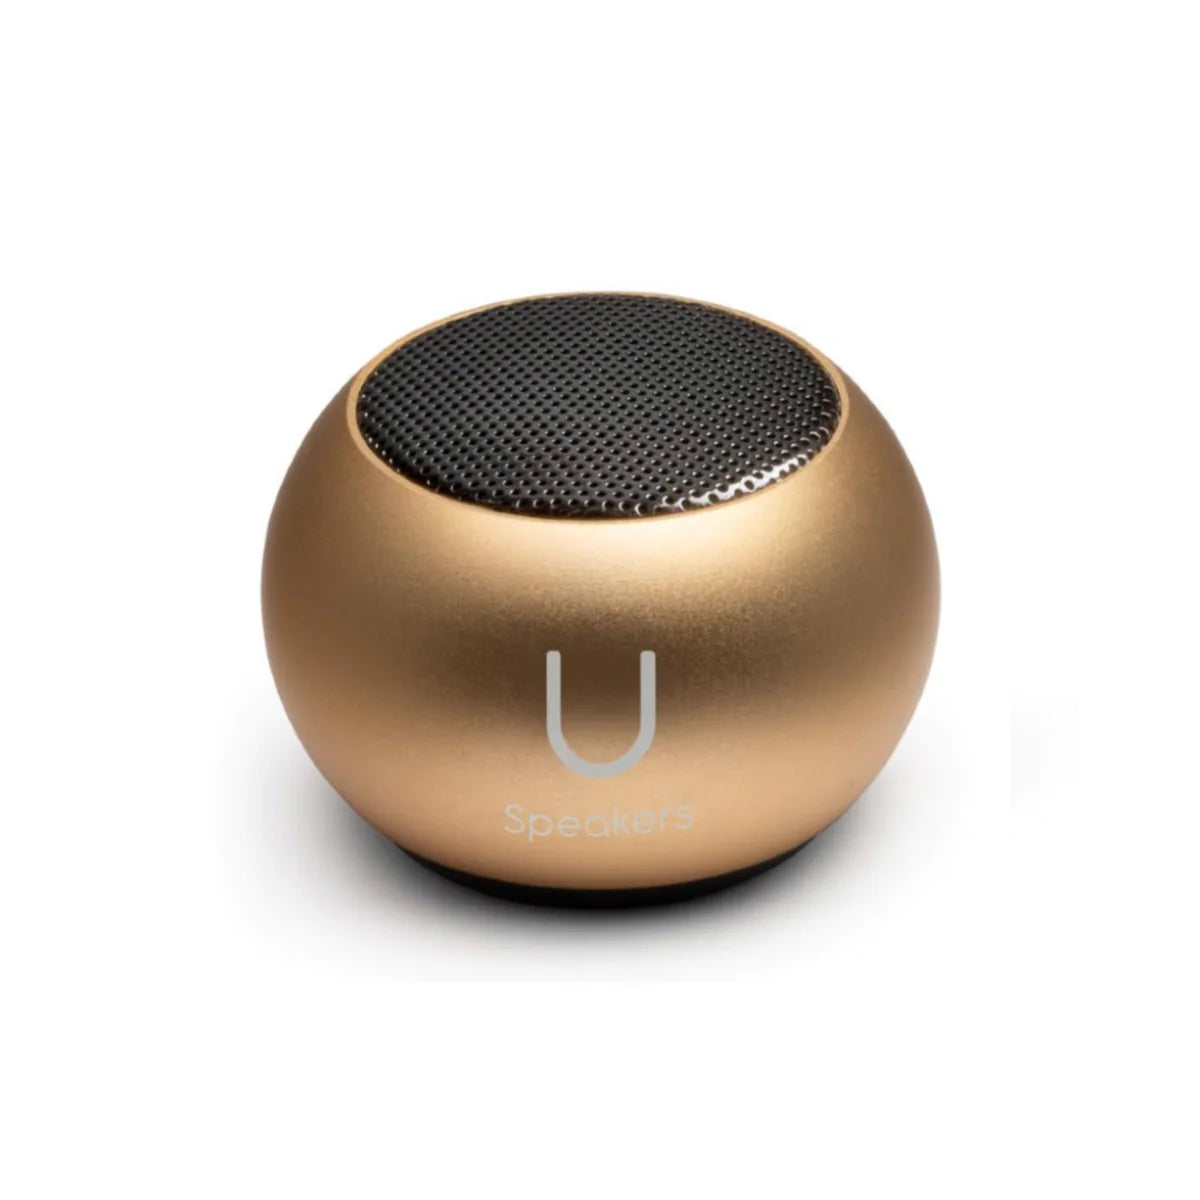 U Mini Wireless Speaker - Classic Gold